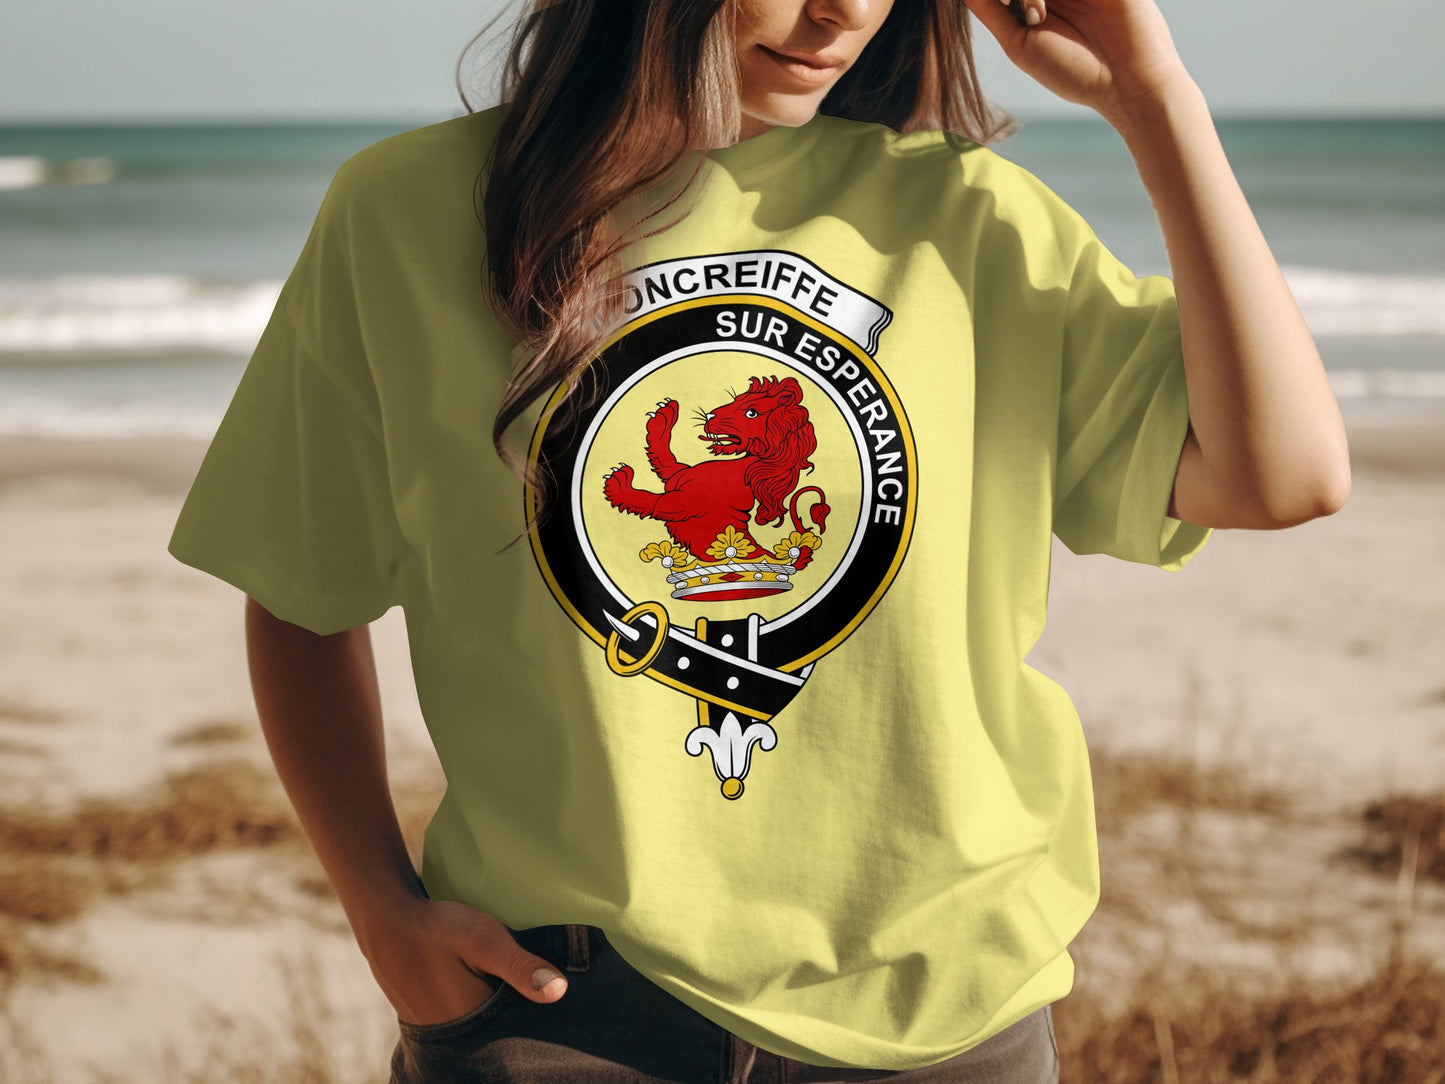 Moncreiffe Scottish Clan Crest Sur Esperance T-Shirt - Living Stone Gifts